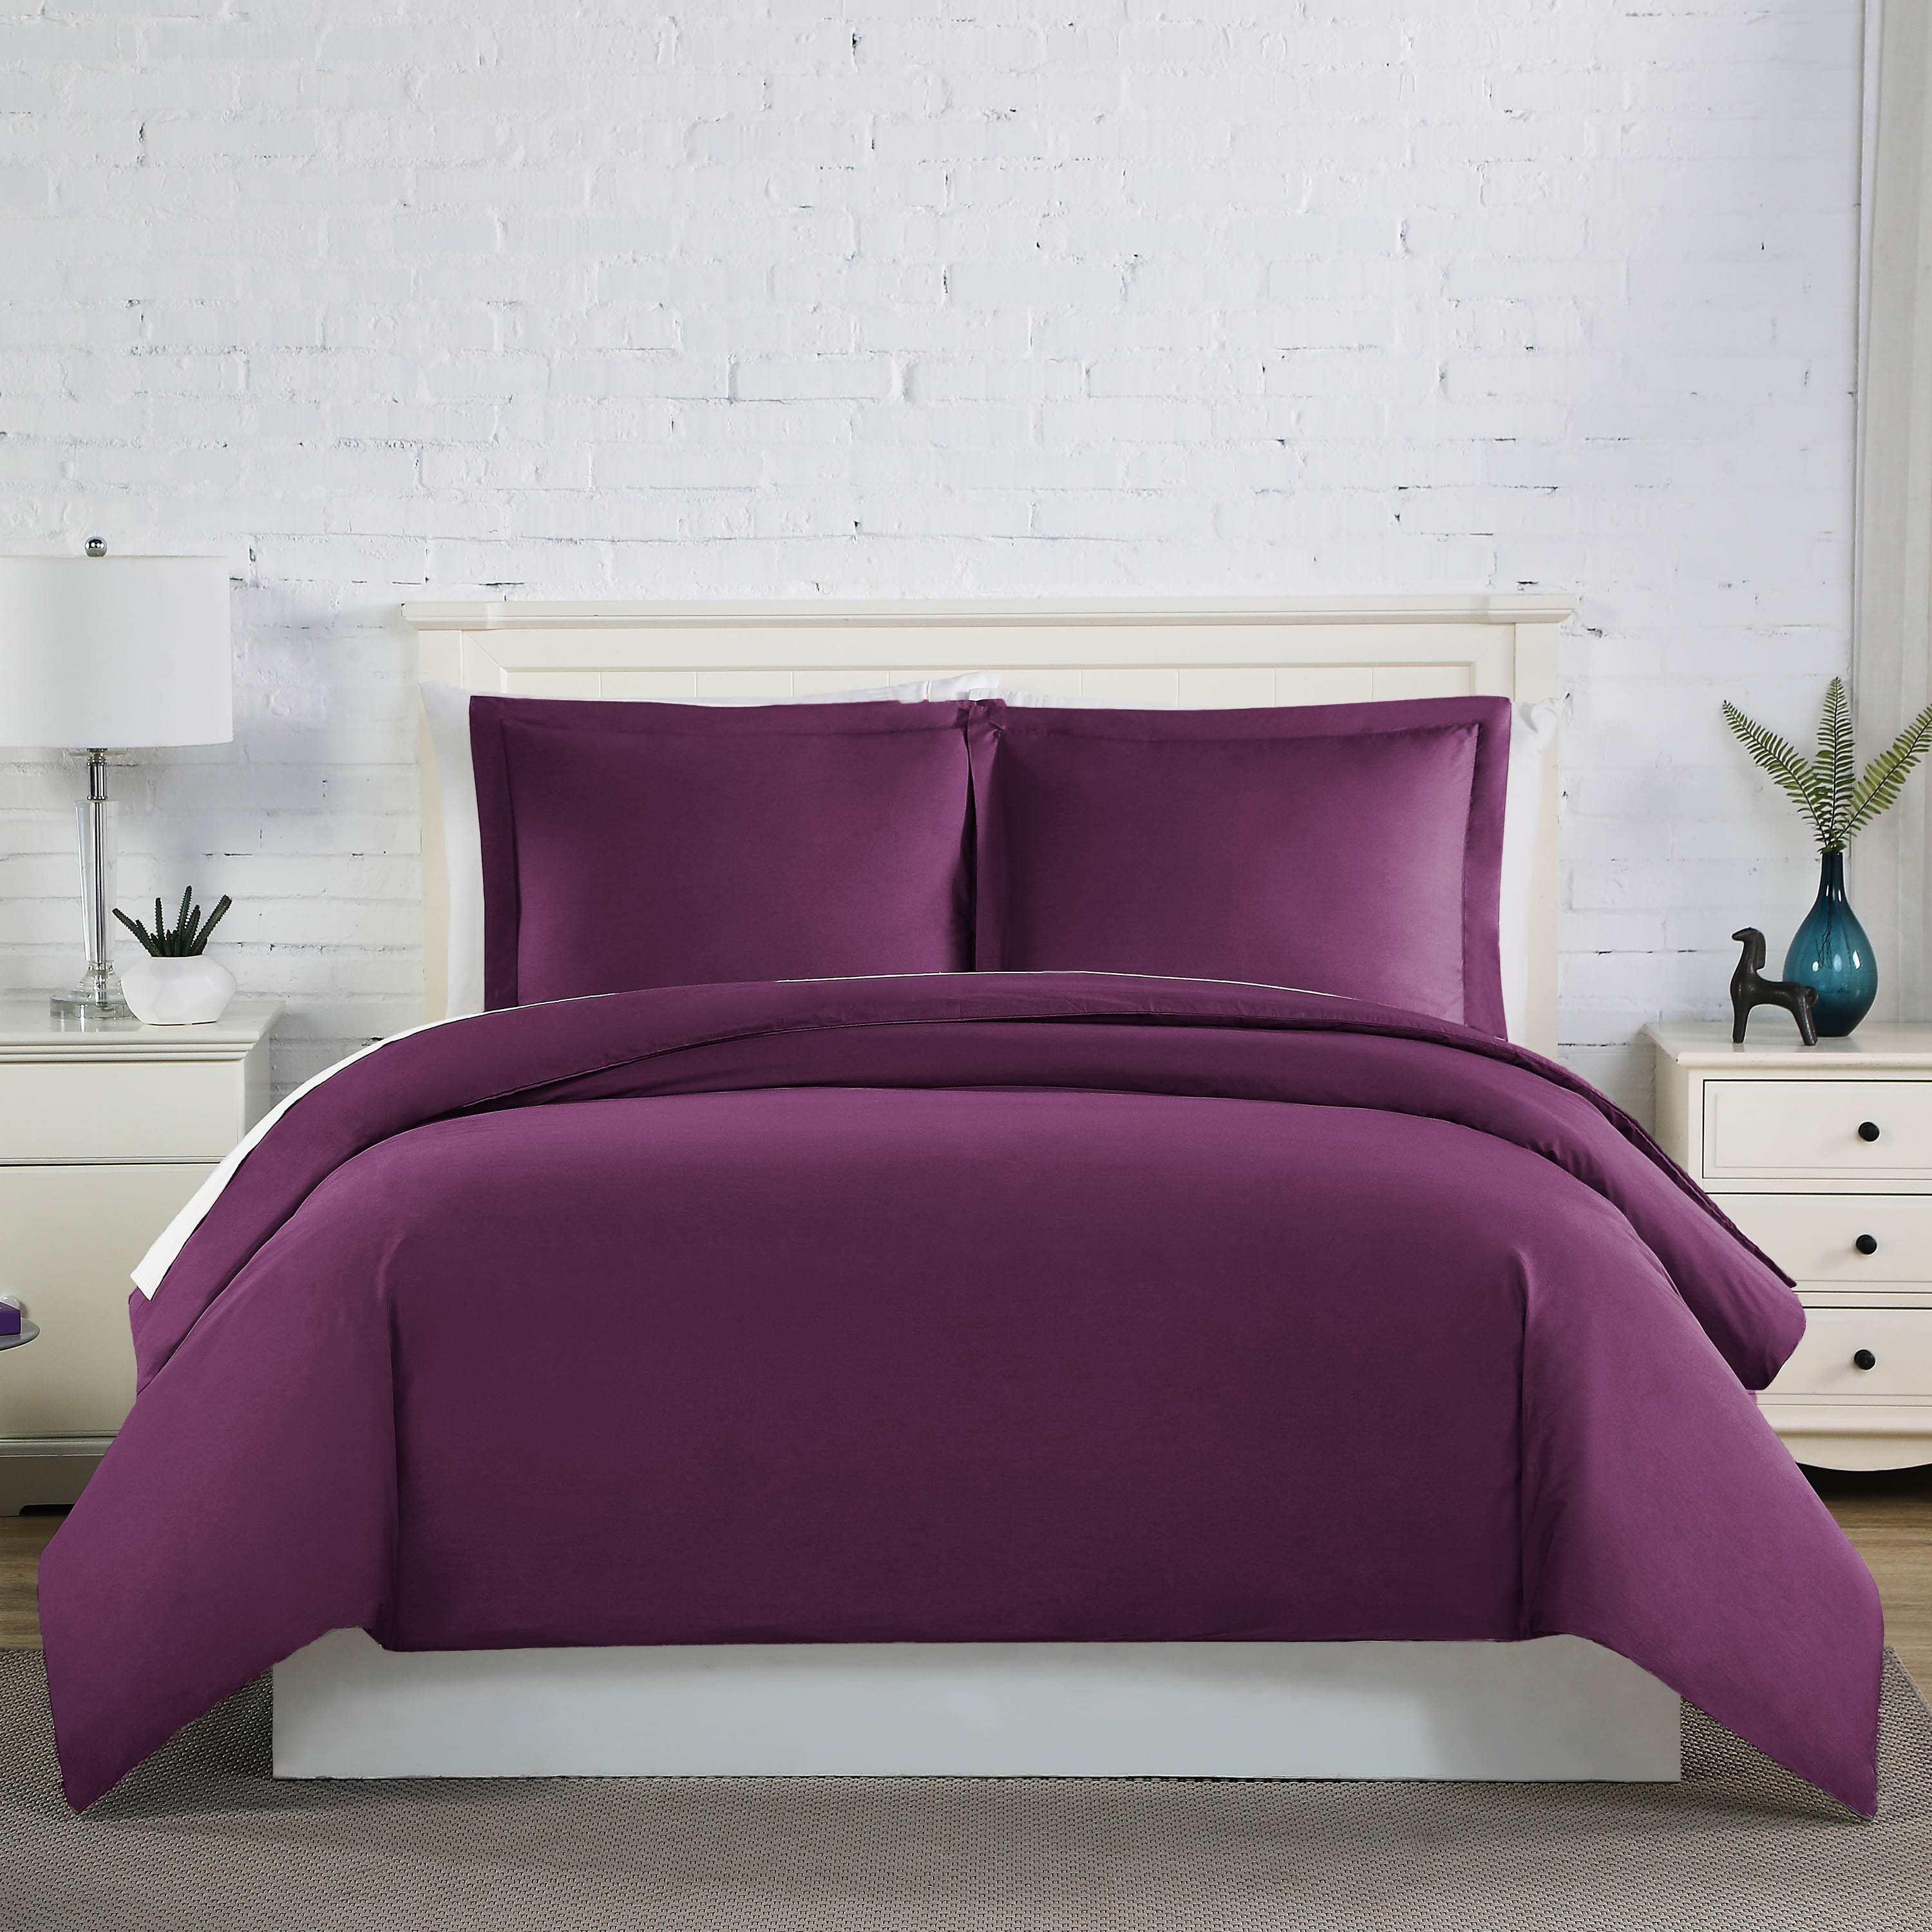 Cotton Poly King Comforter Set, 106 X 94 home decor - Mod Lifestyles